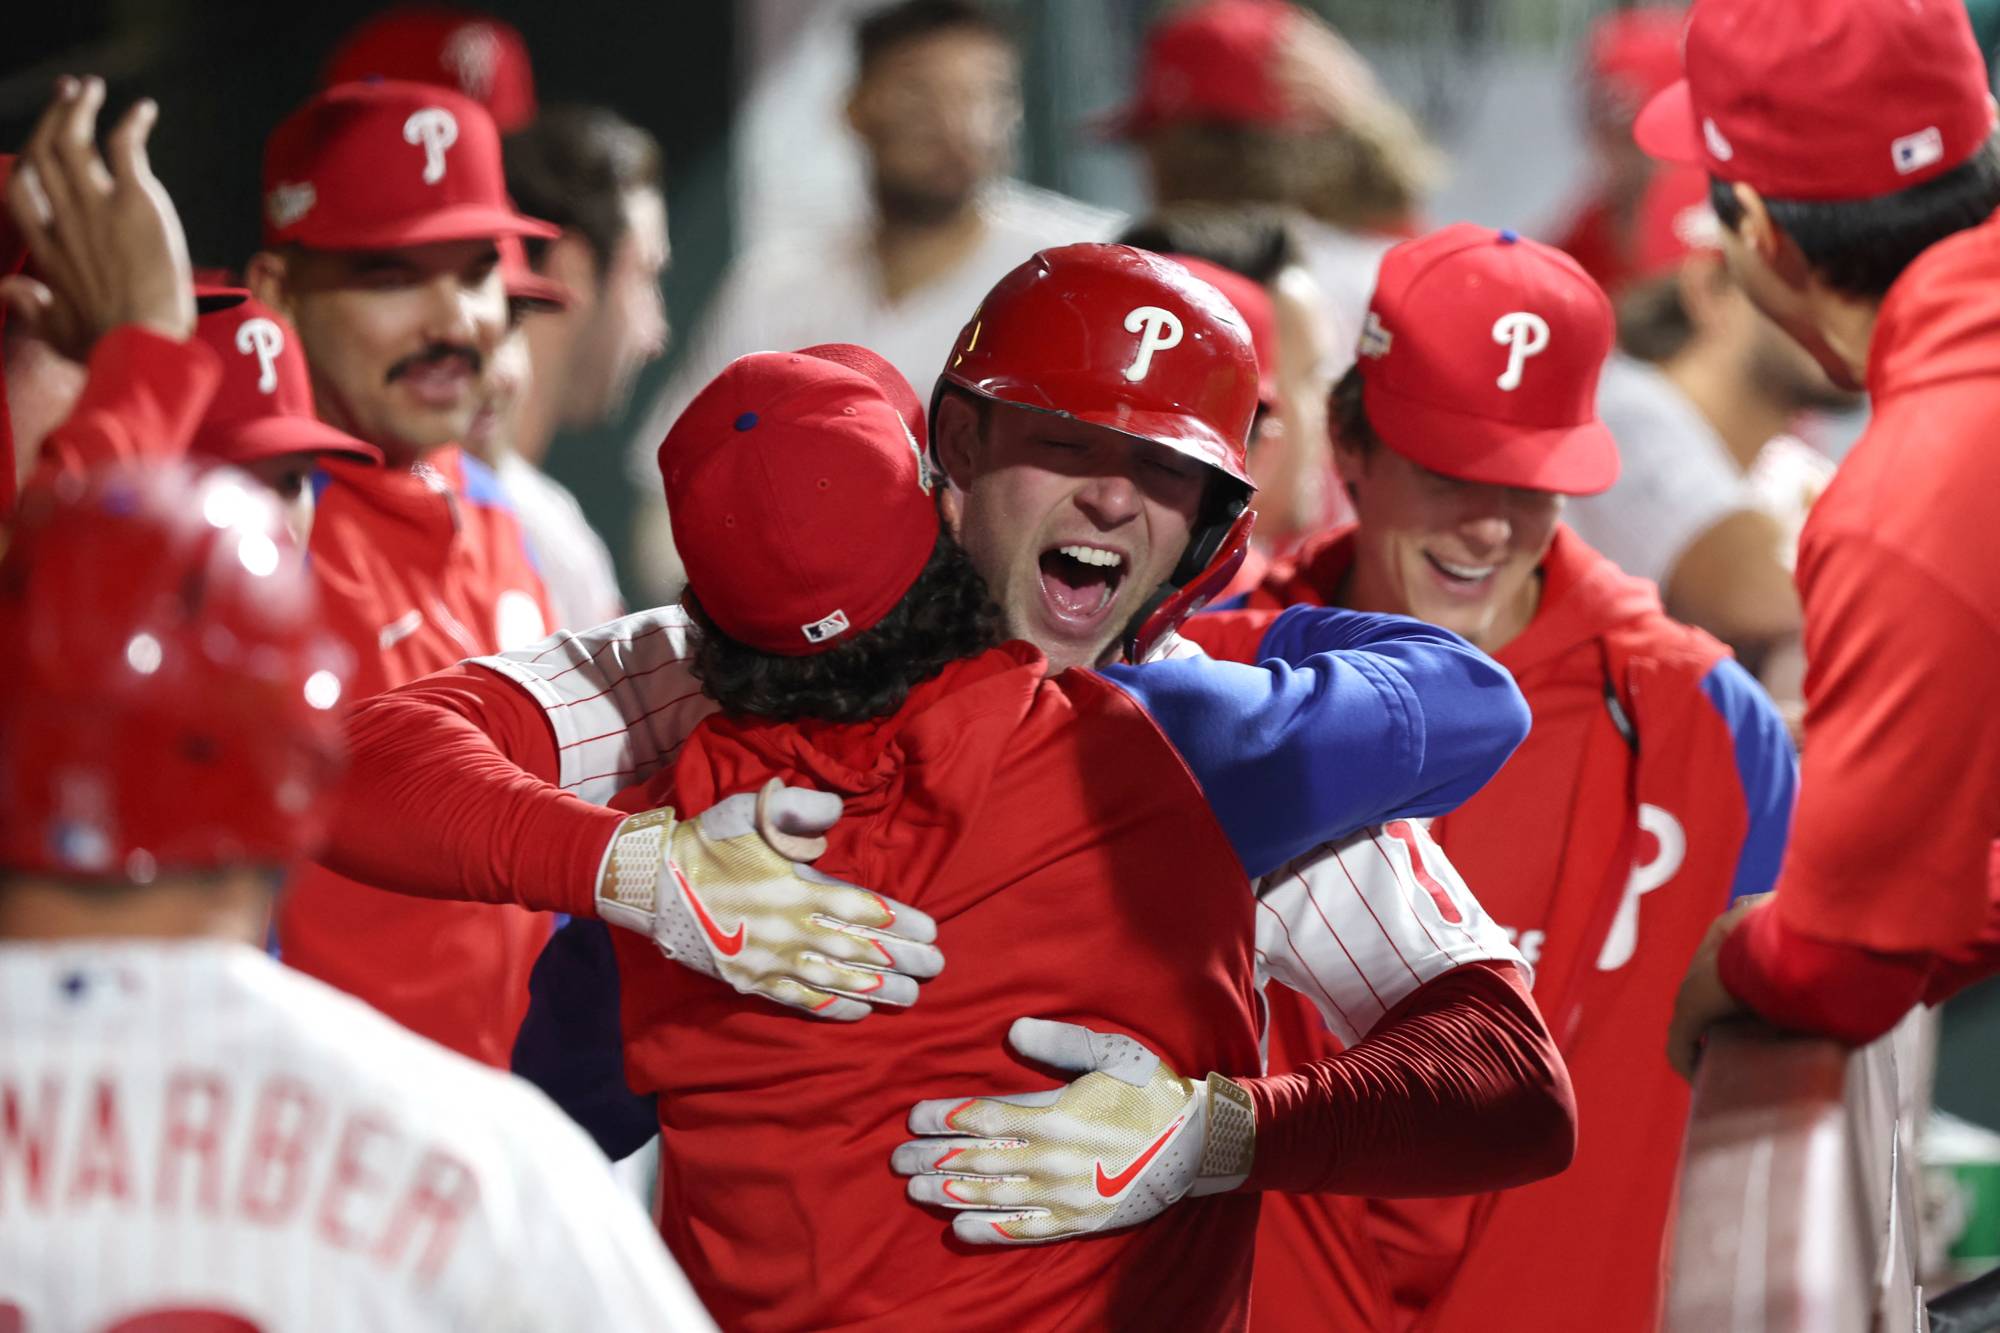 Philadelphia Phillies - Rhys Hoskins and Bryce Harper celebrating Hoskins'  solo home run.